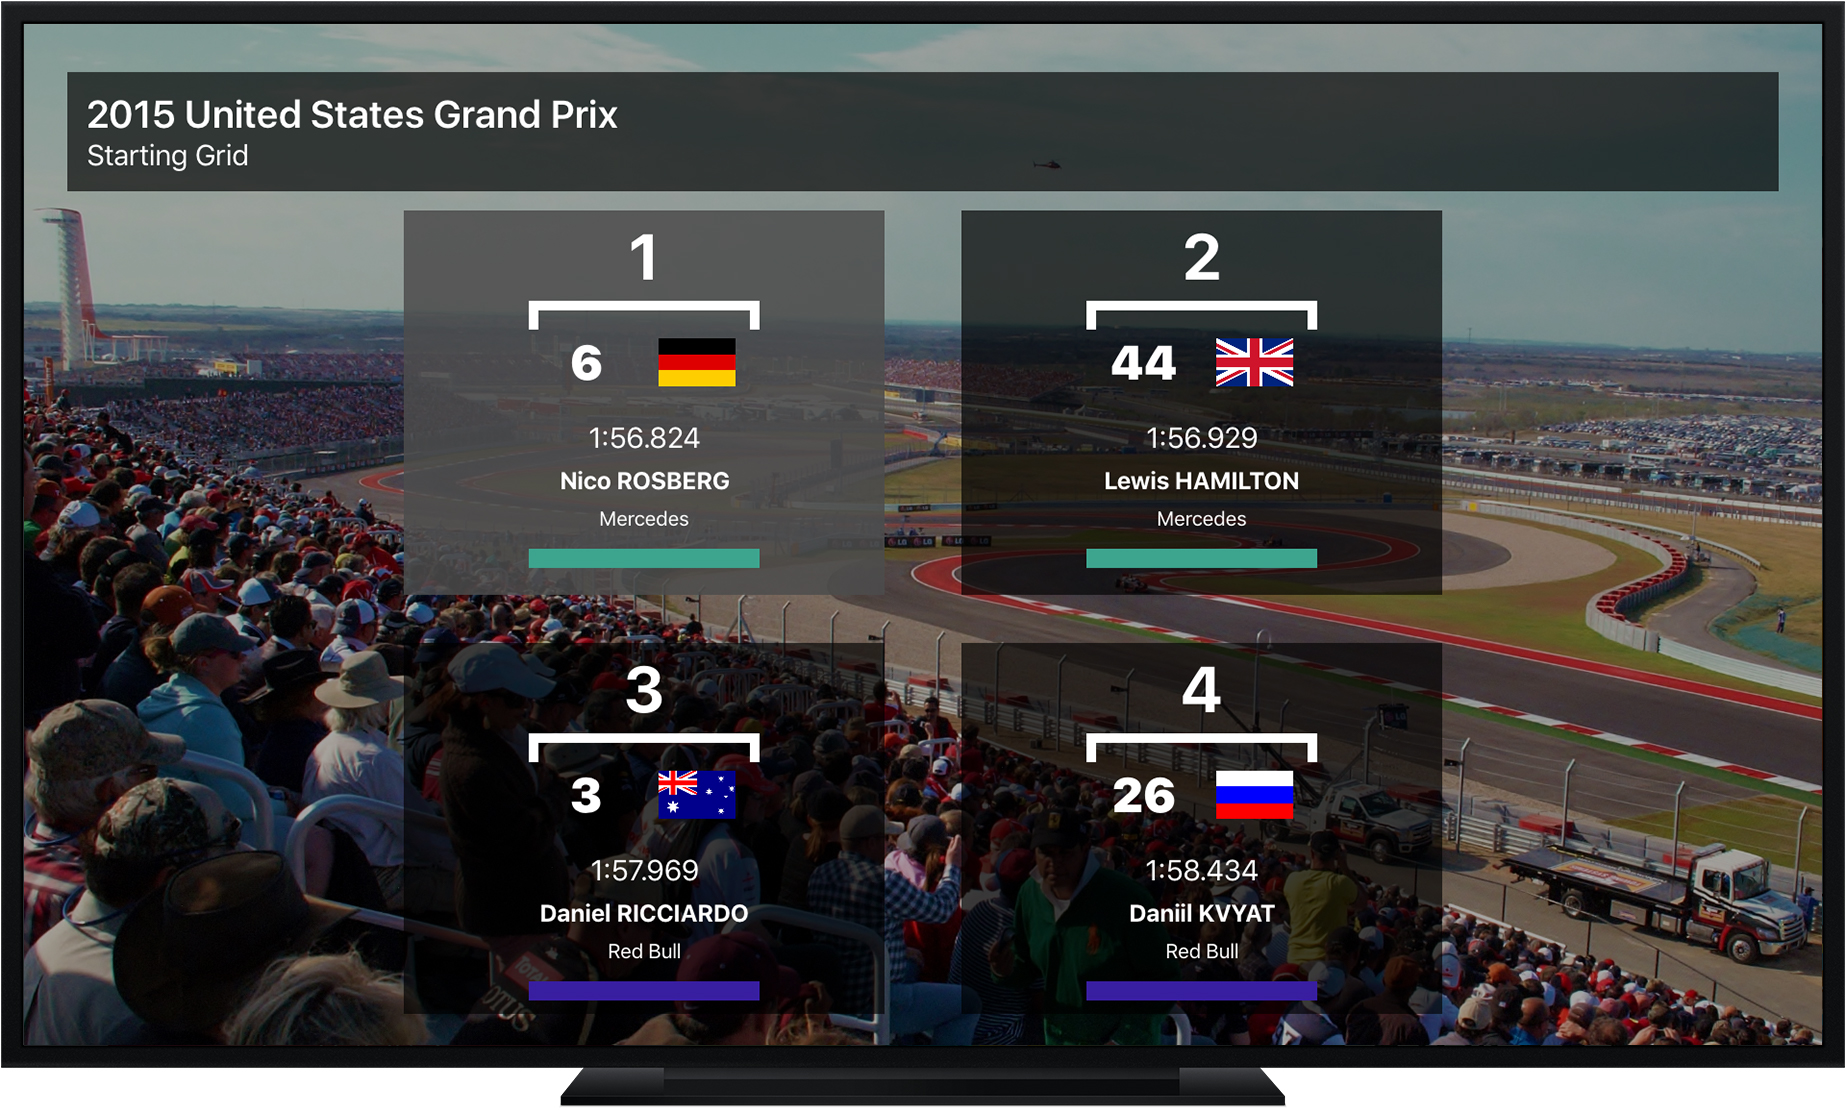 Starting Grid - Grand Prix Stats